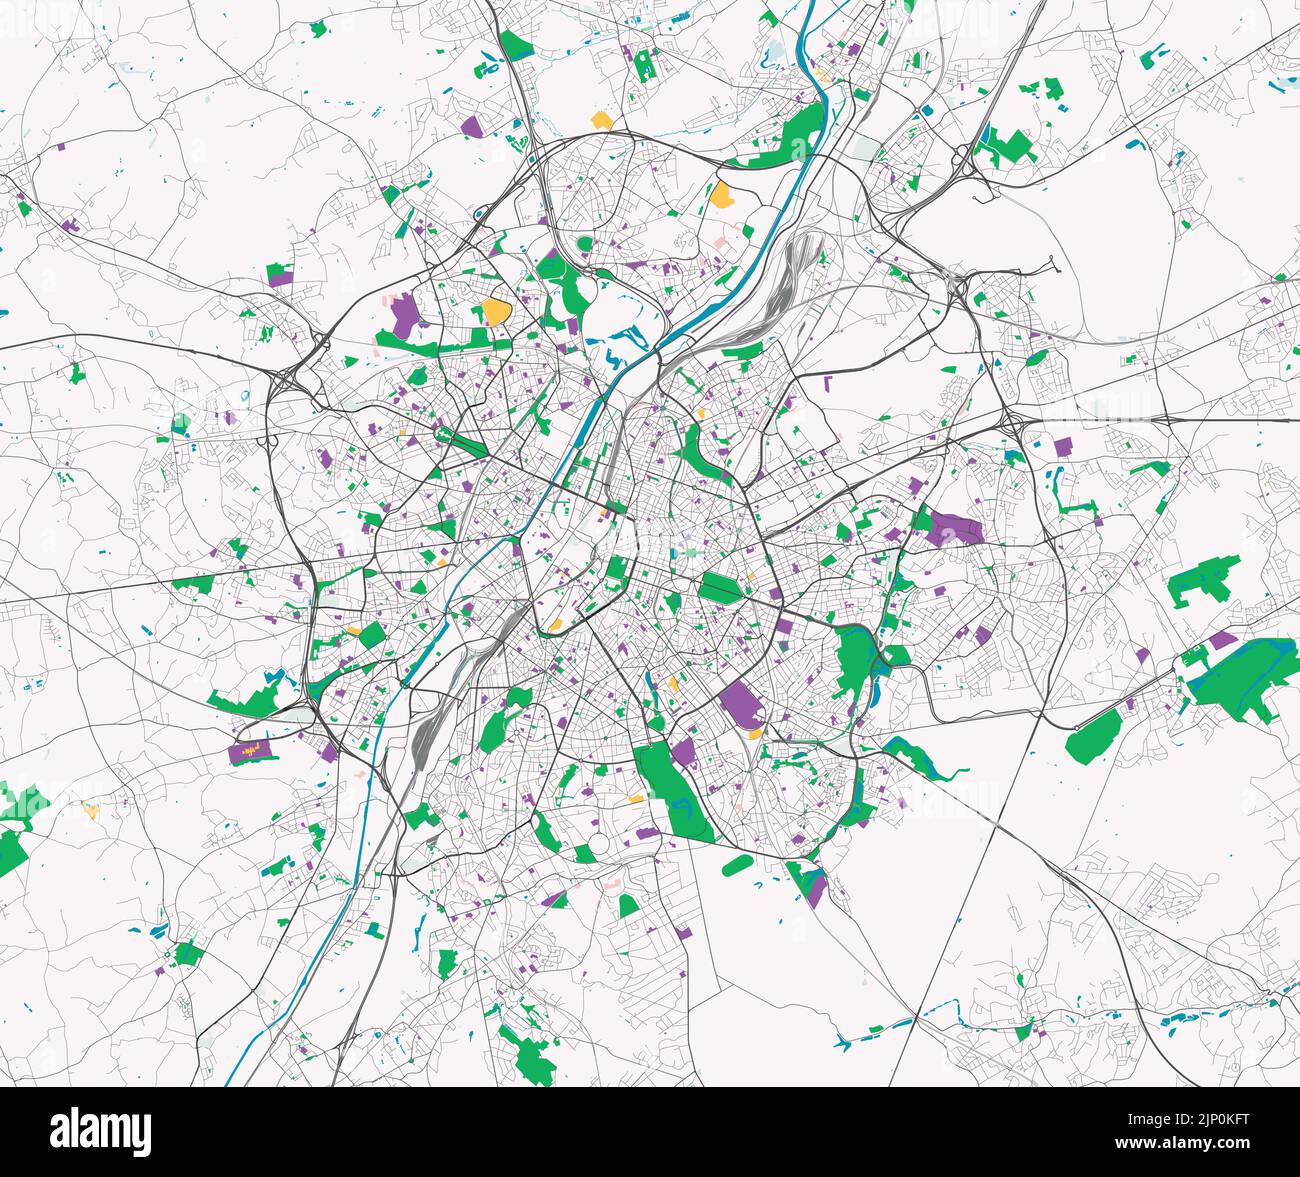 City map of brussels Belgium vector image Stock Vector